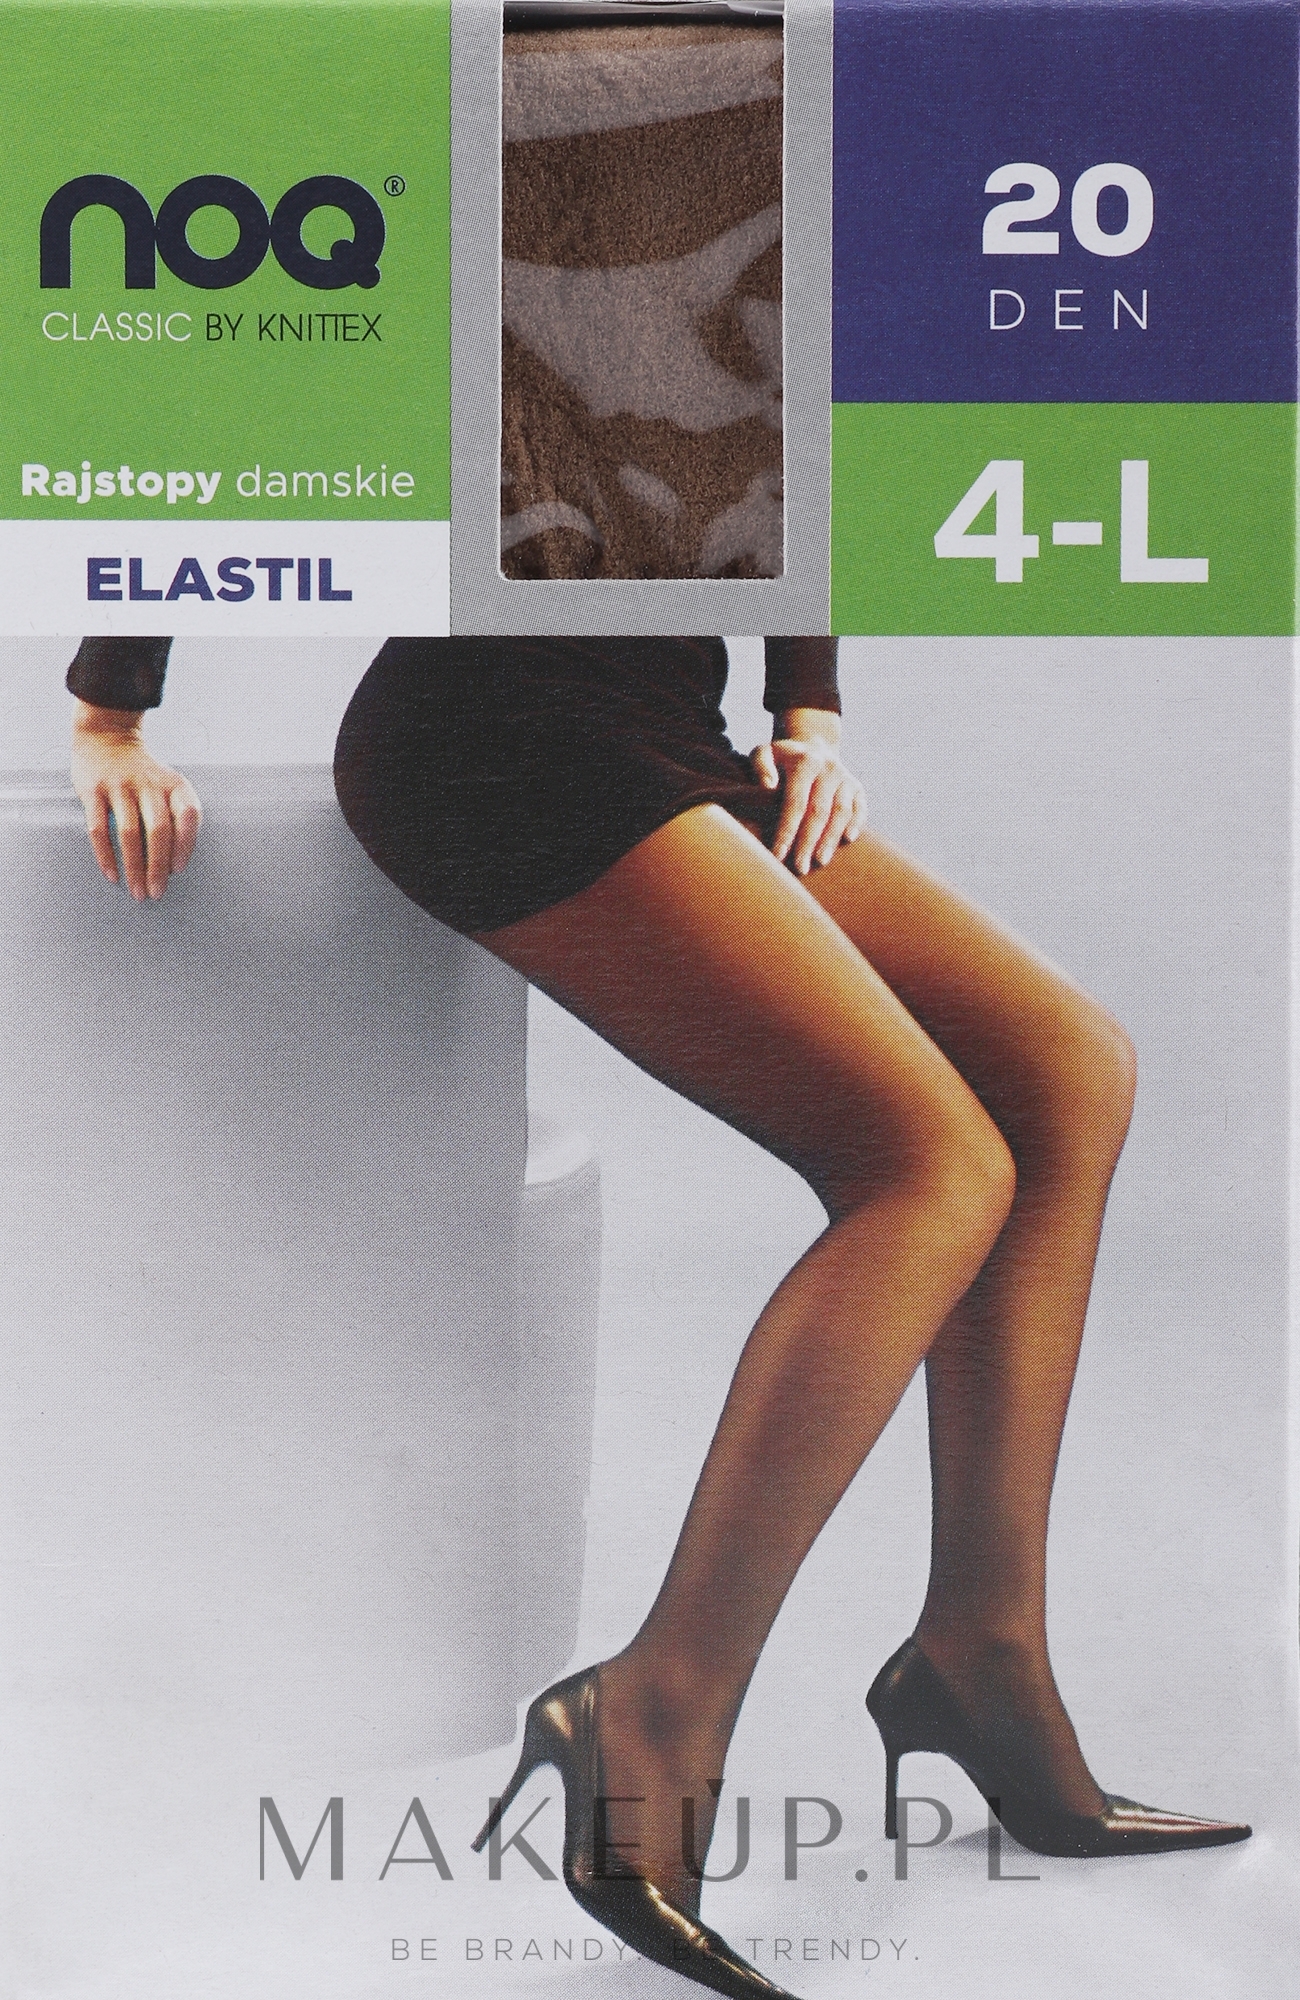 Rajstopy damskie Elastil 20 DEN, beige - Knittex — Zdjęcie 4